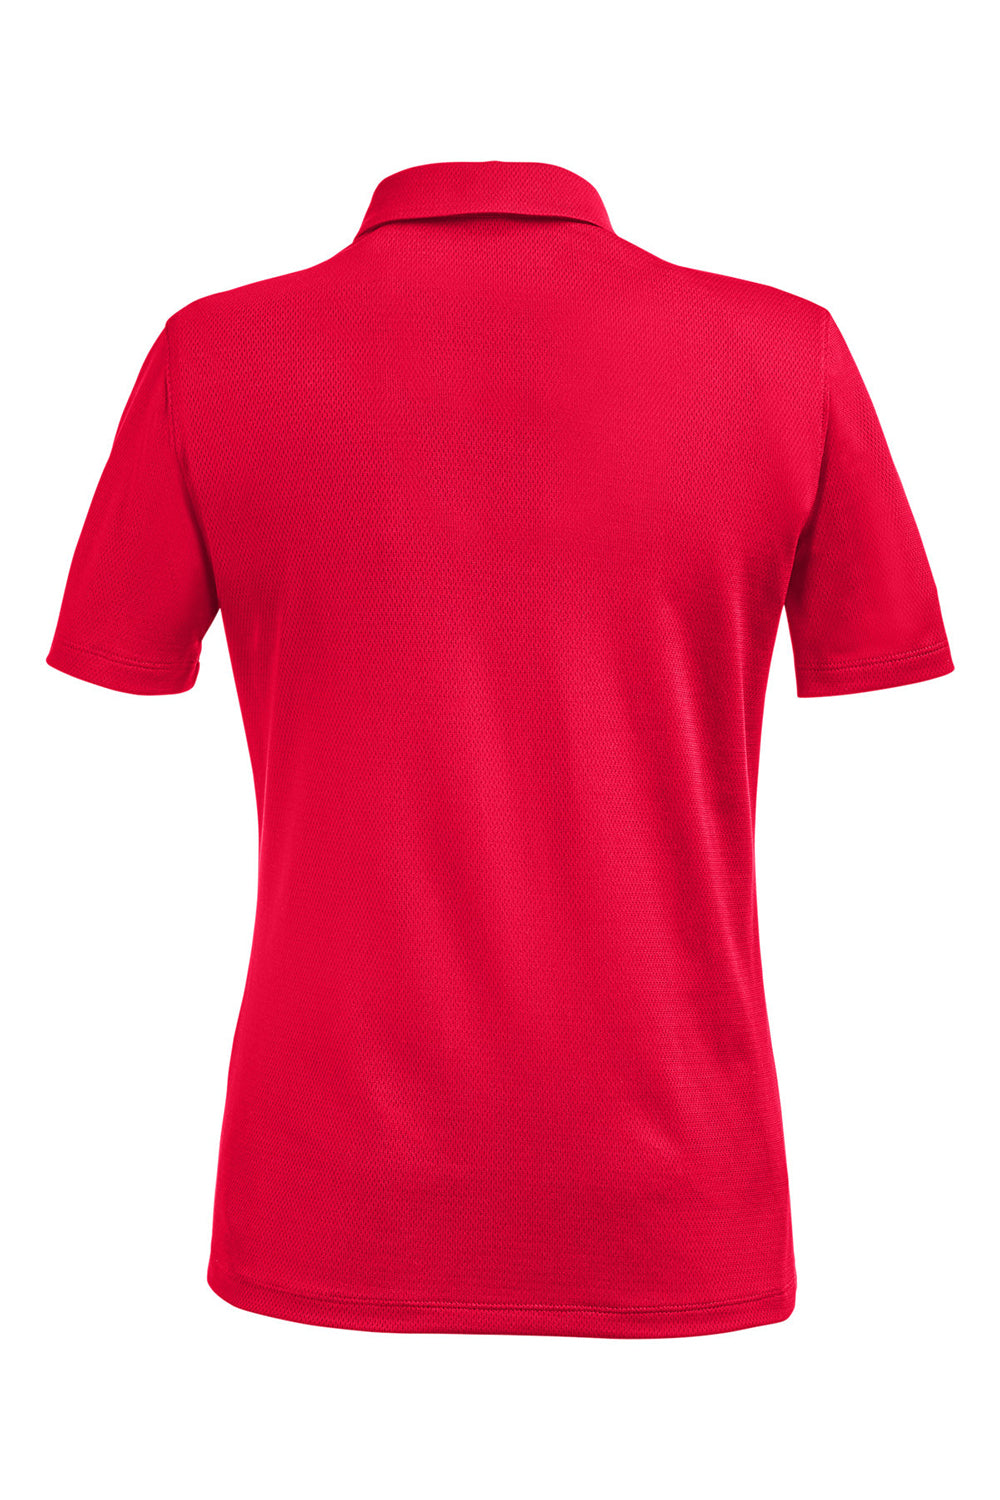 Under Armour 1370431 Womens Tech Moisture Wicking Short Sleeve Polo Shirt Red Flat Back